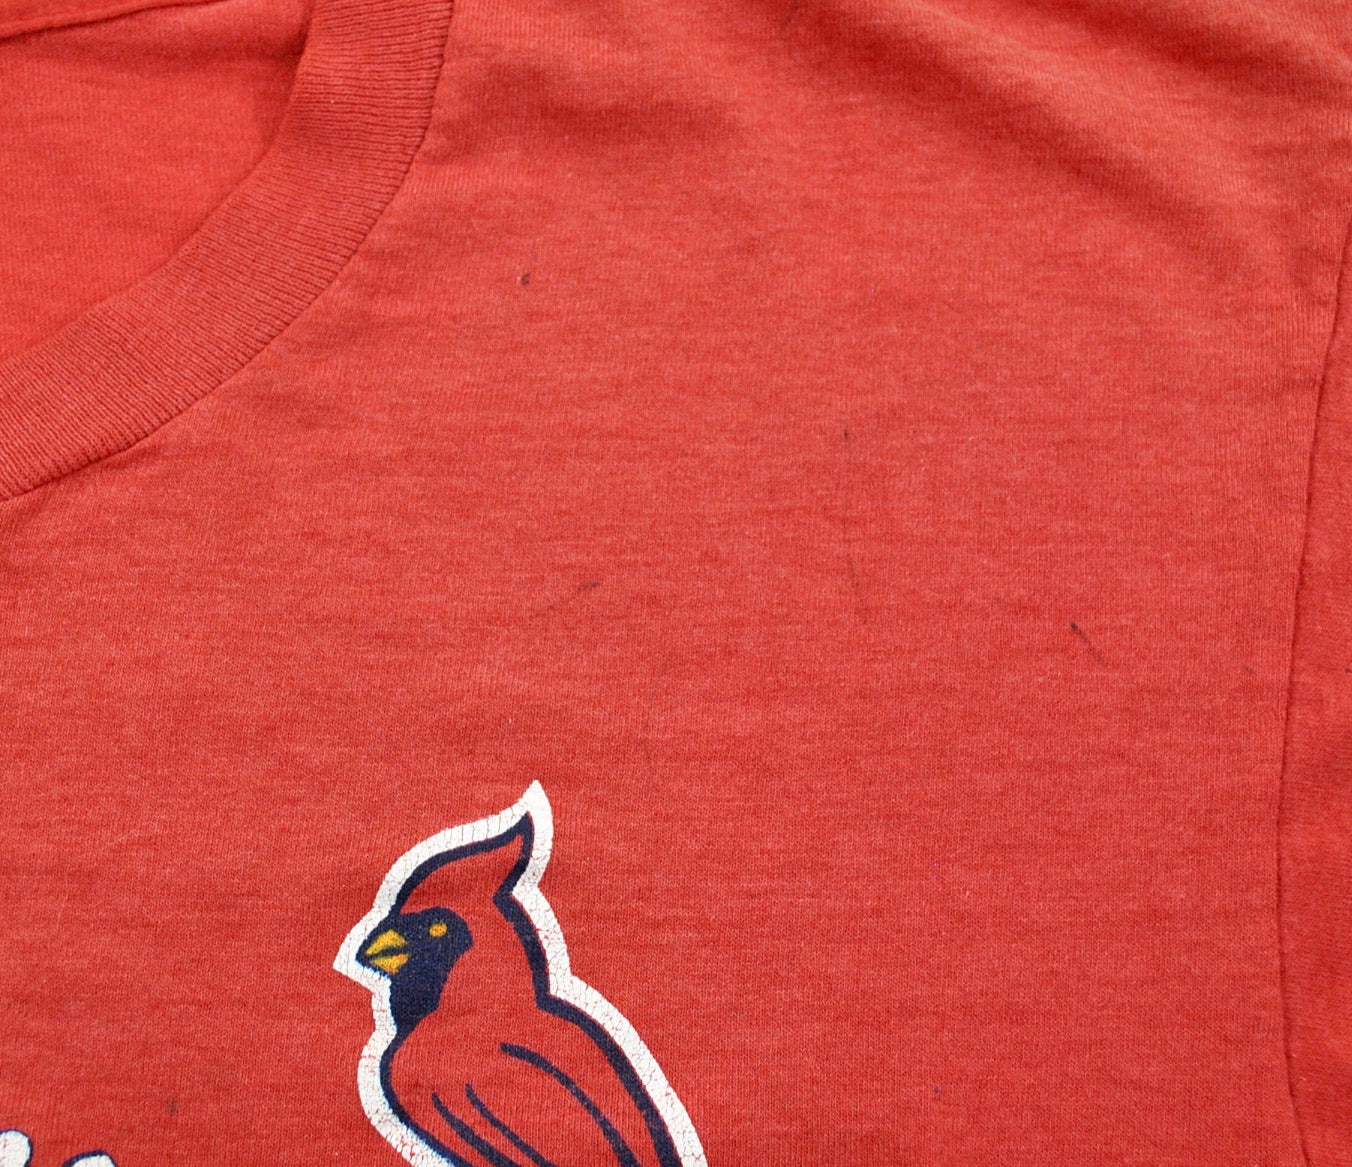 Vintage St. Louis Cardinals 80s Shirt Size Medium – Yesterday's Attic